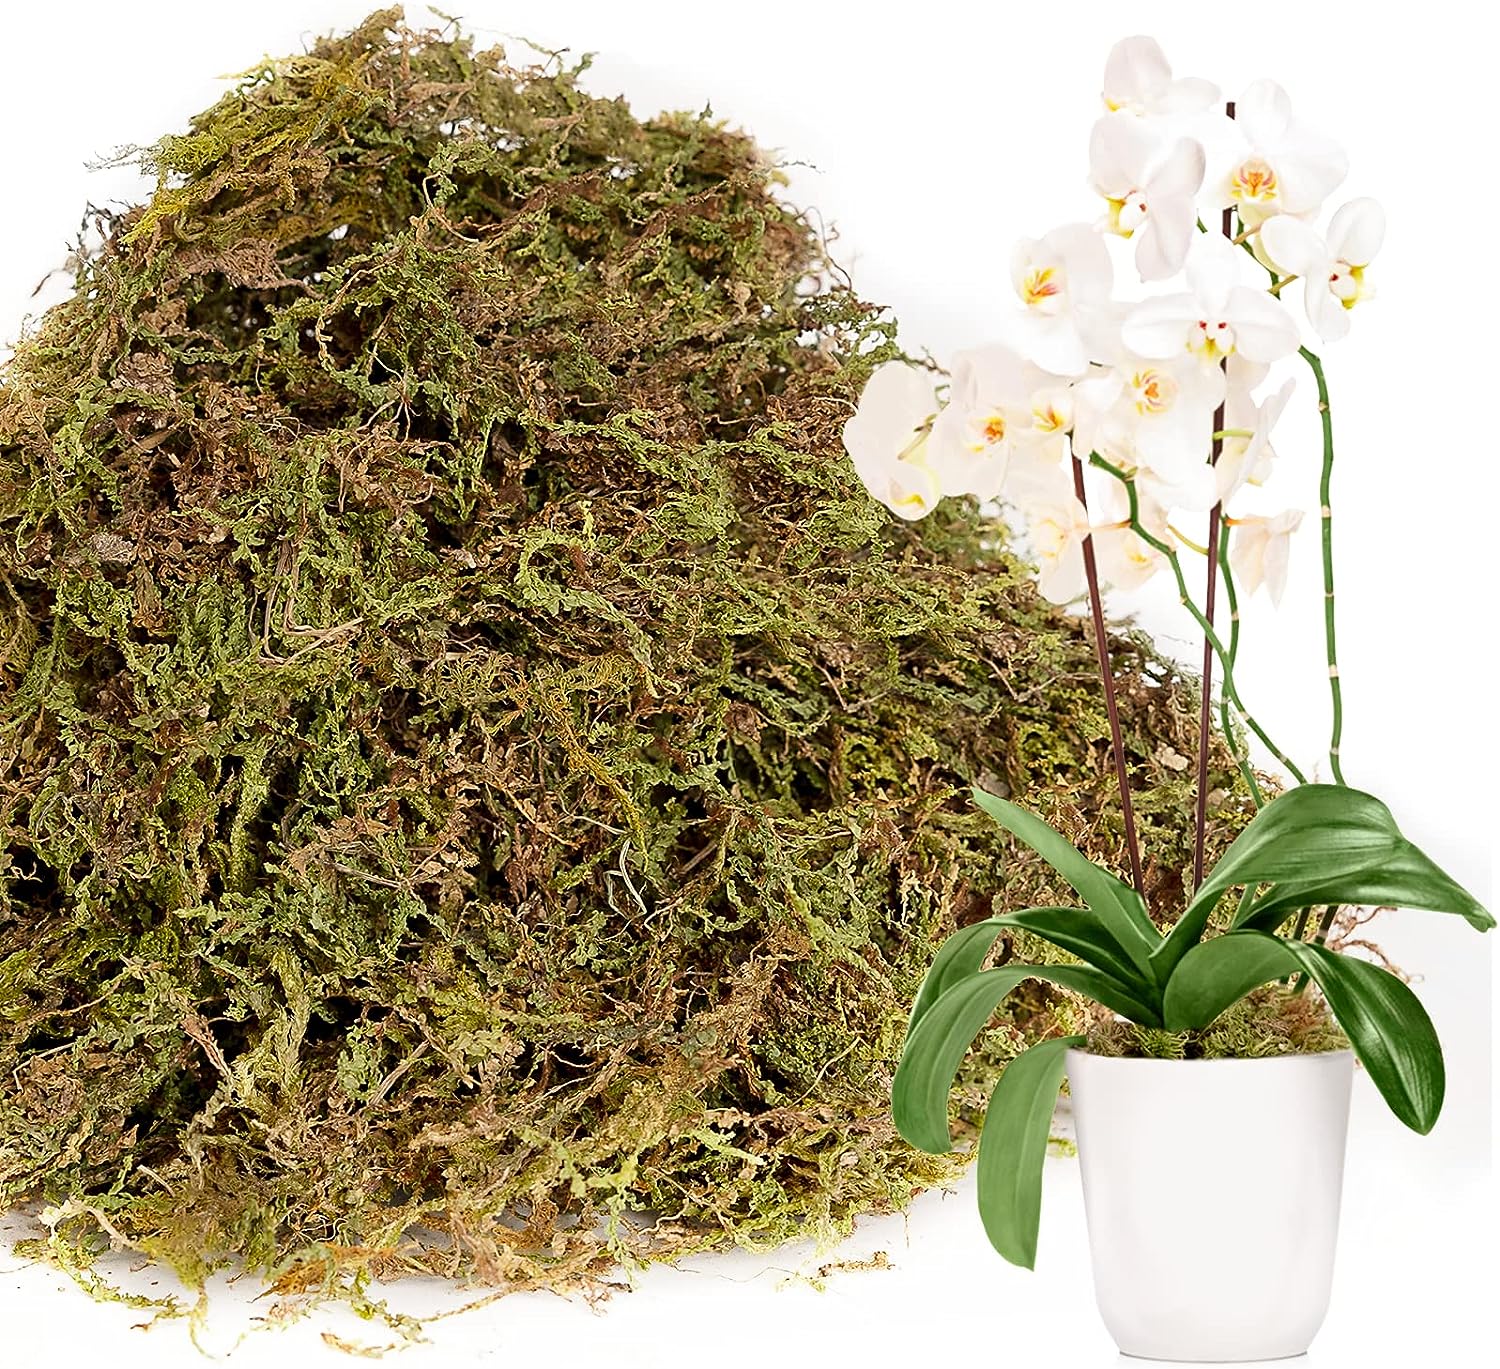 CLSR2U Dried Moss for Plants - 1.5qt/3.5oz Orchids Reptiles Live